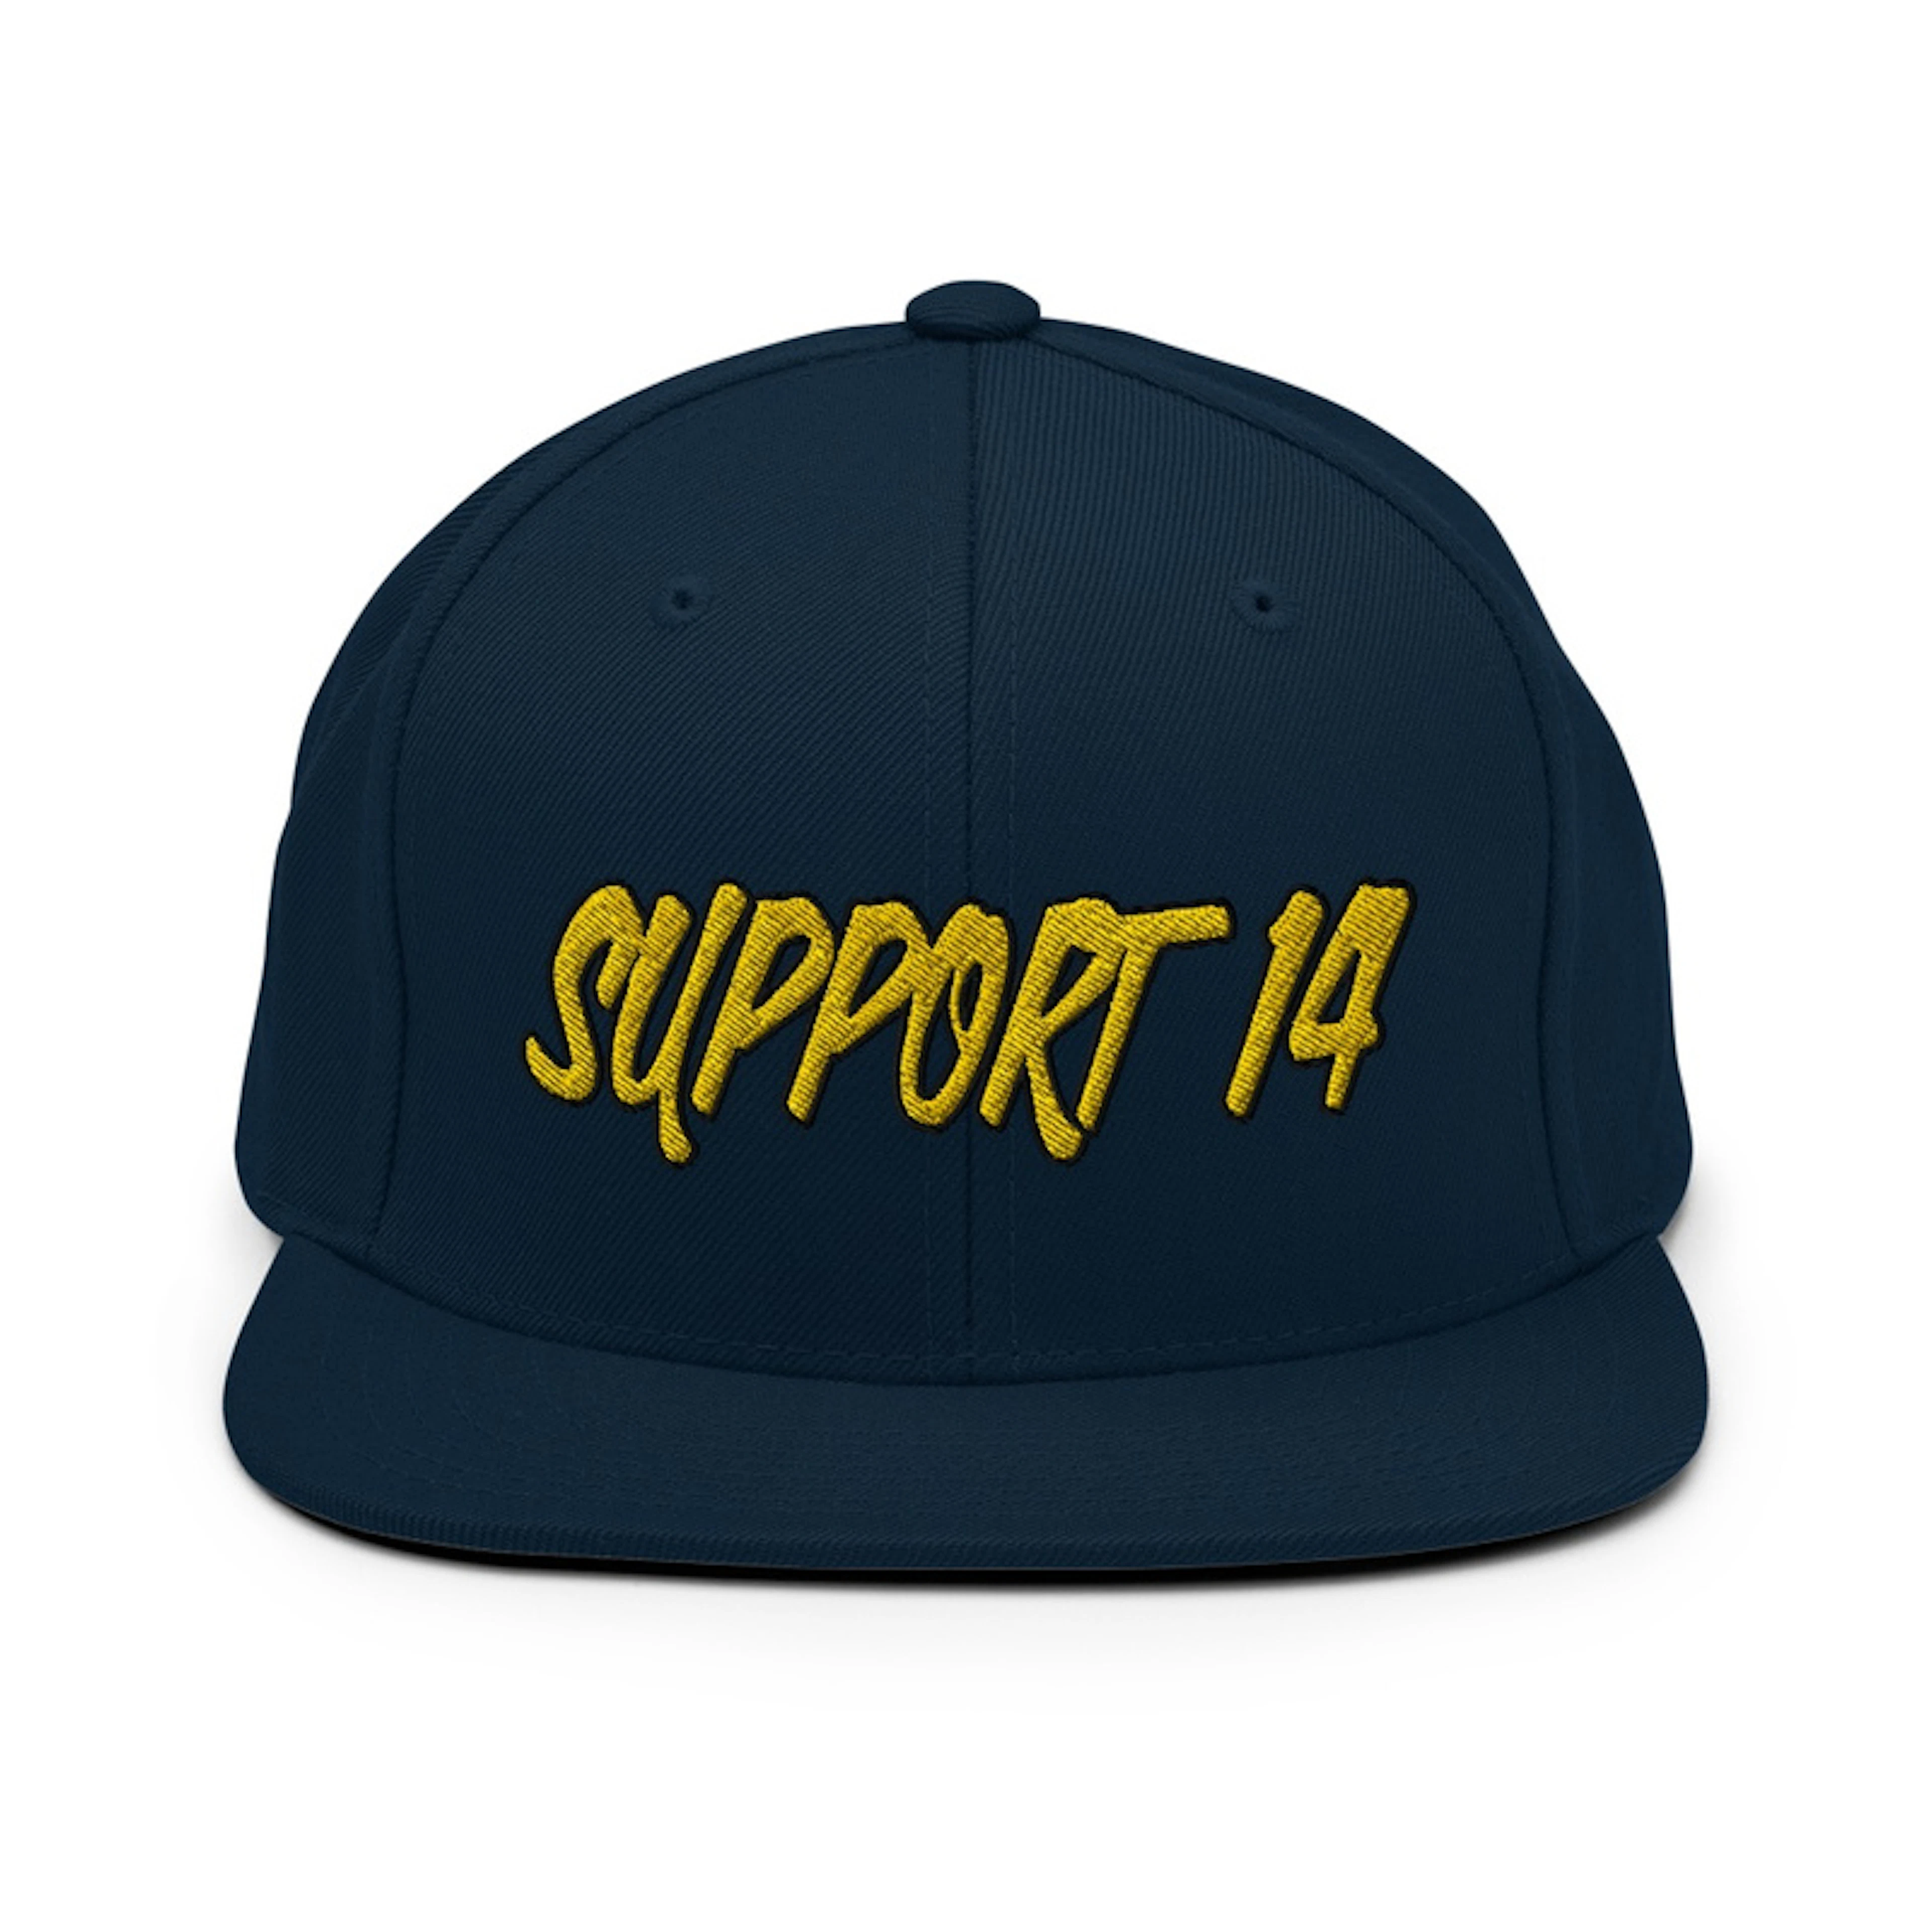 Nuggets MC Support 14 Trucker Hat 